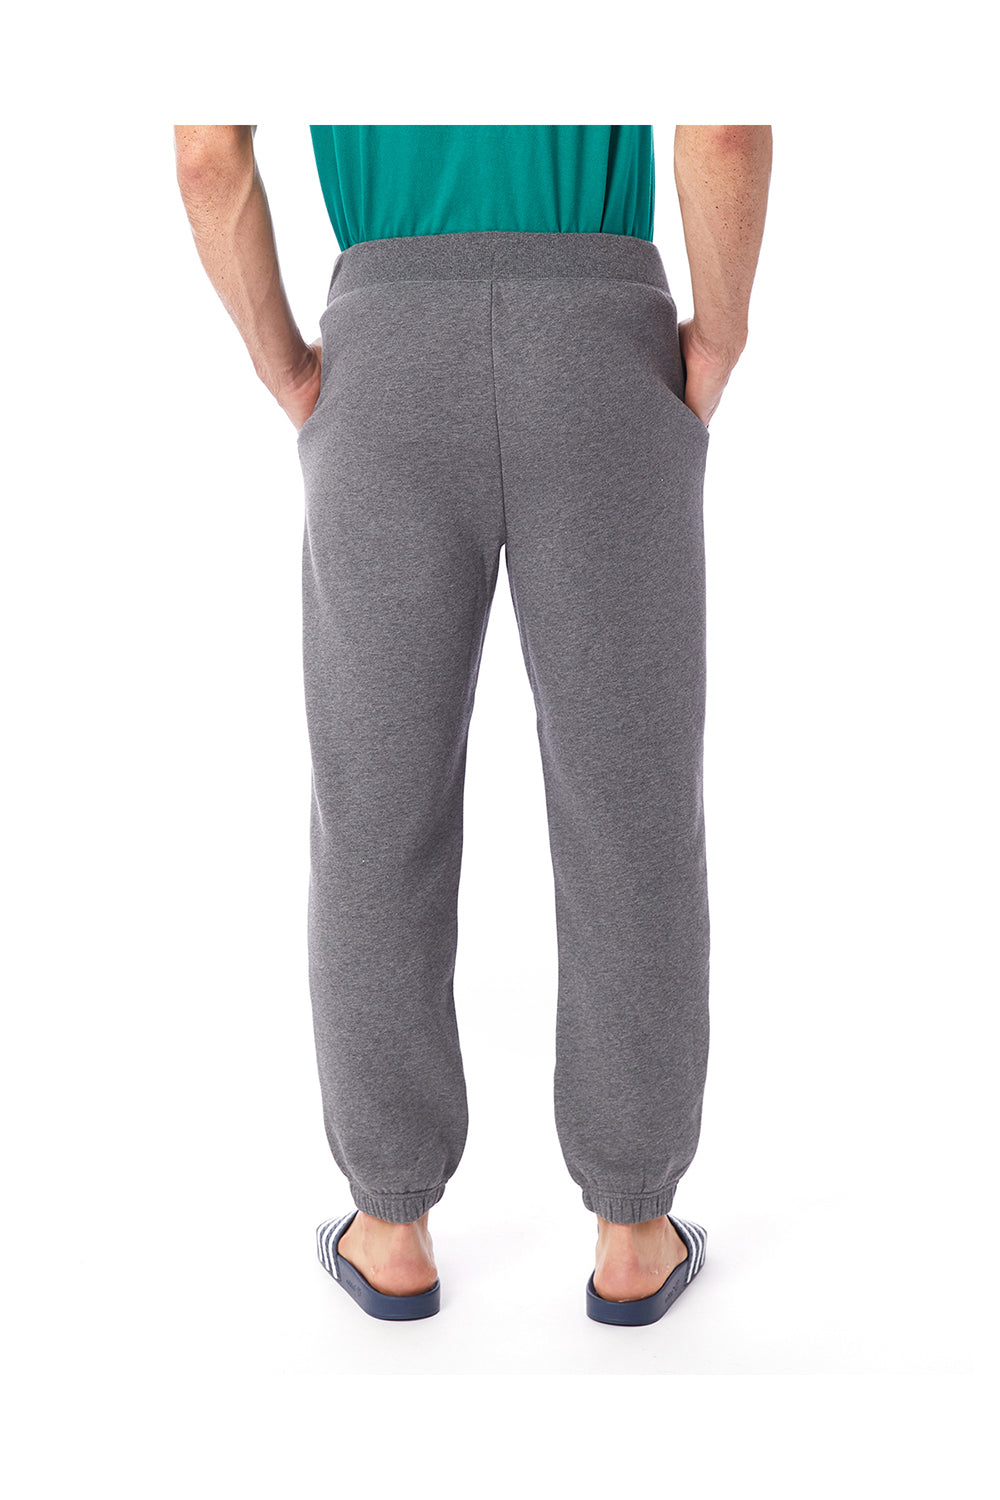 Alternative 8803PF Mens Eco Cozy Fleece Sweatpants w/ Pockets Heather Dark Grey Model Back